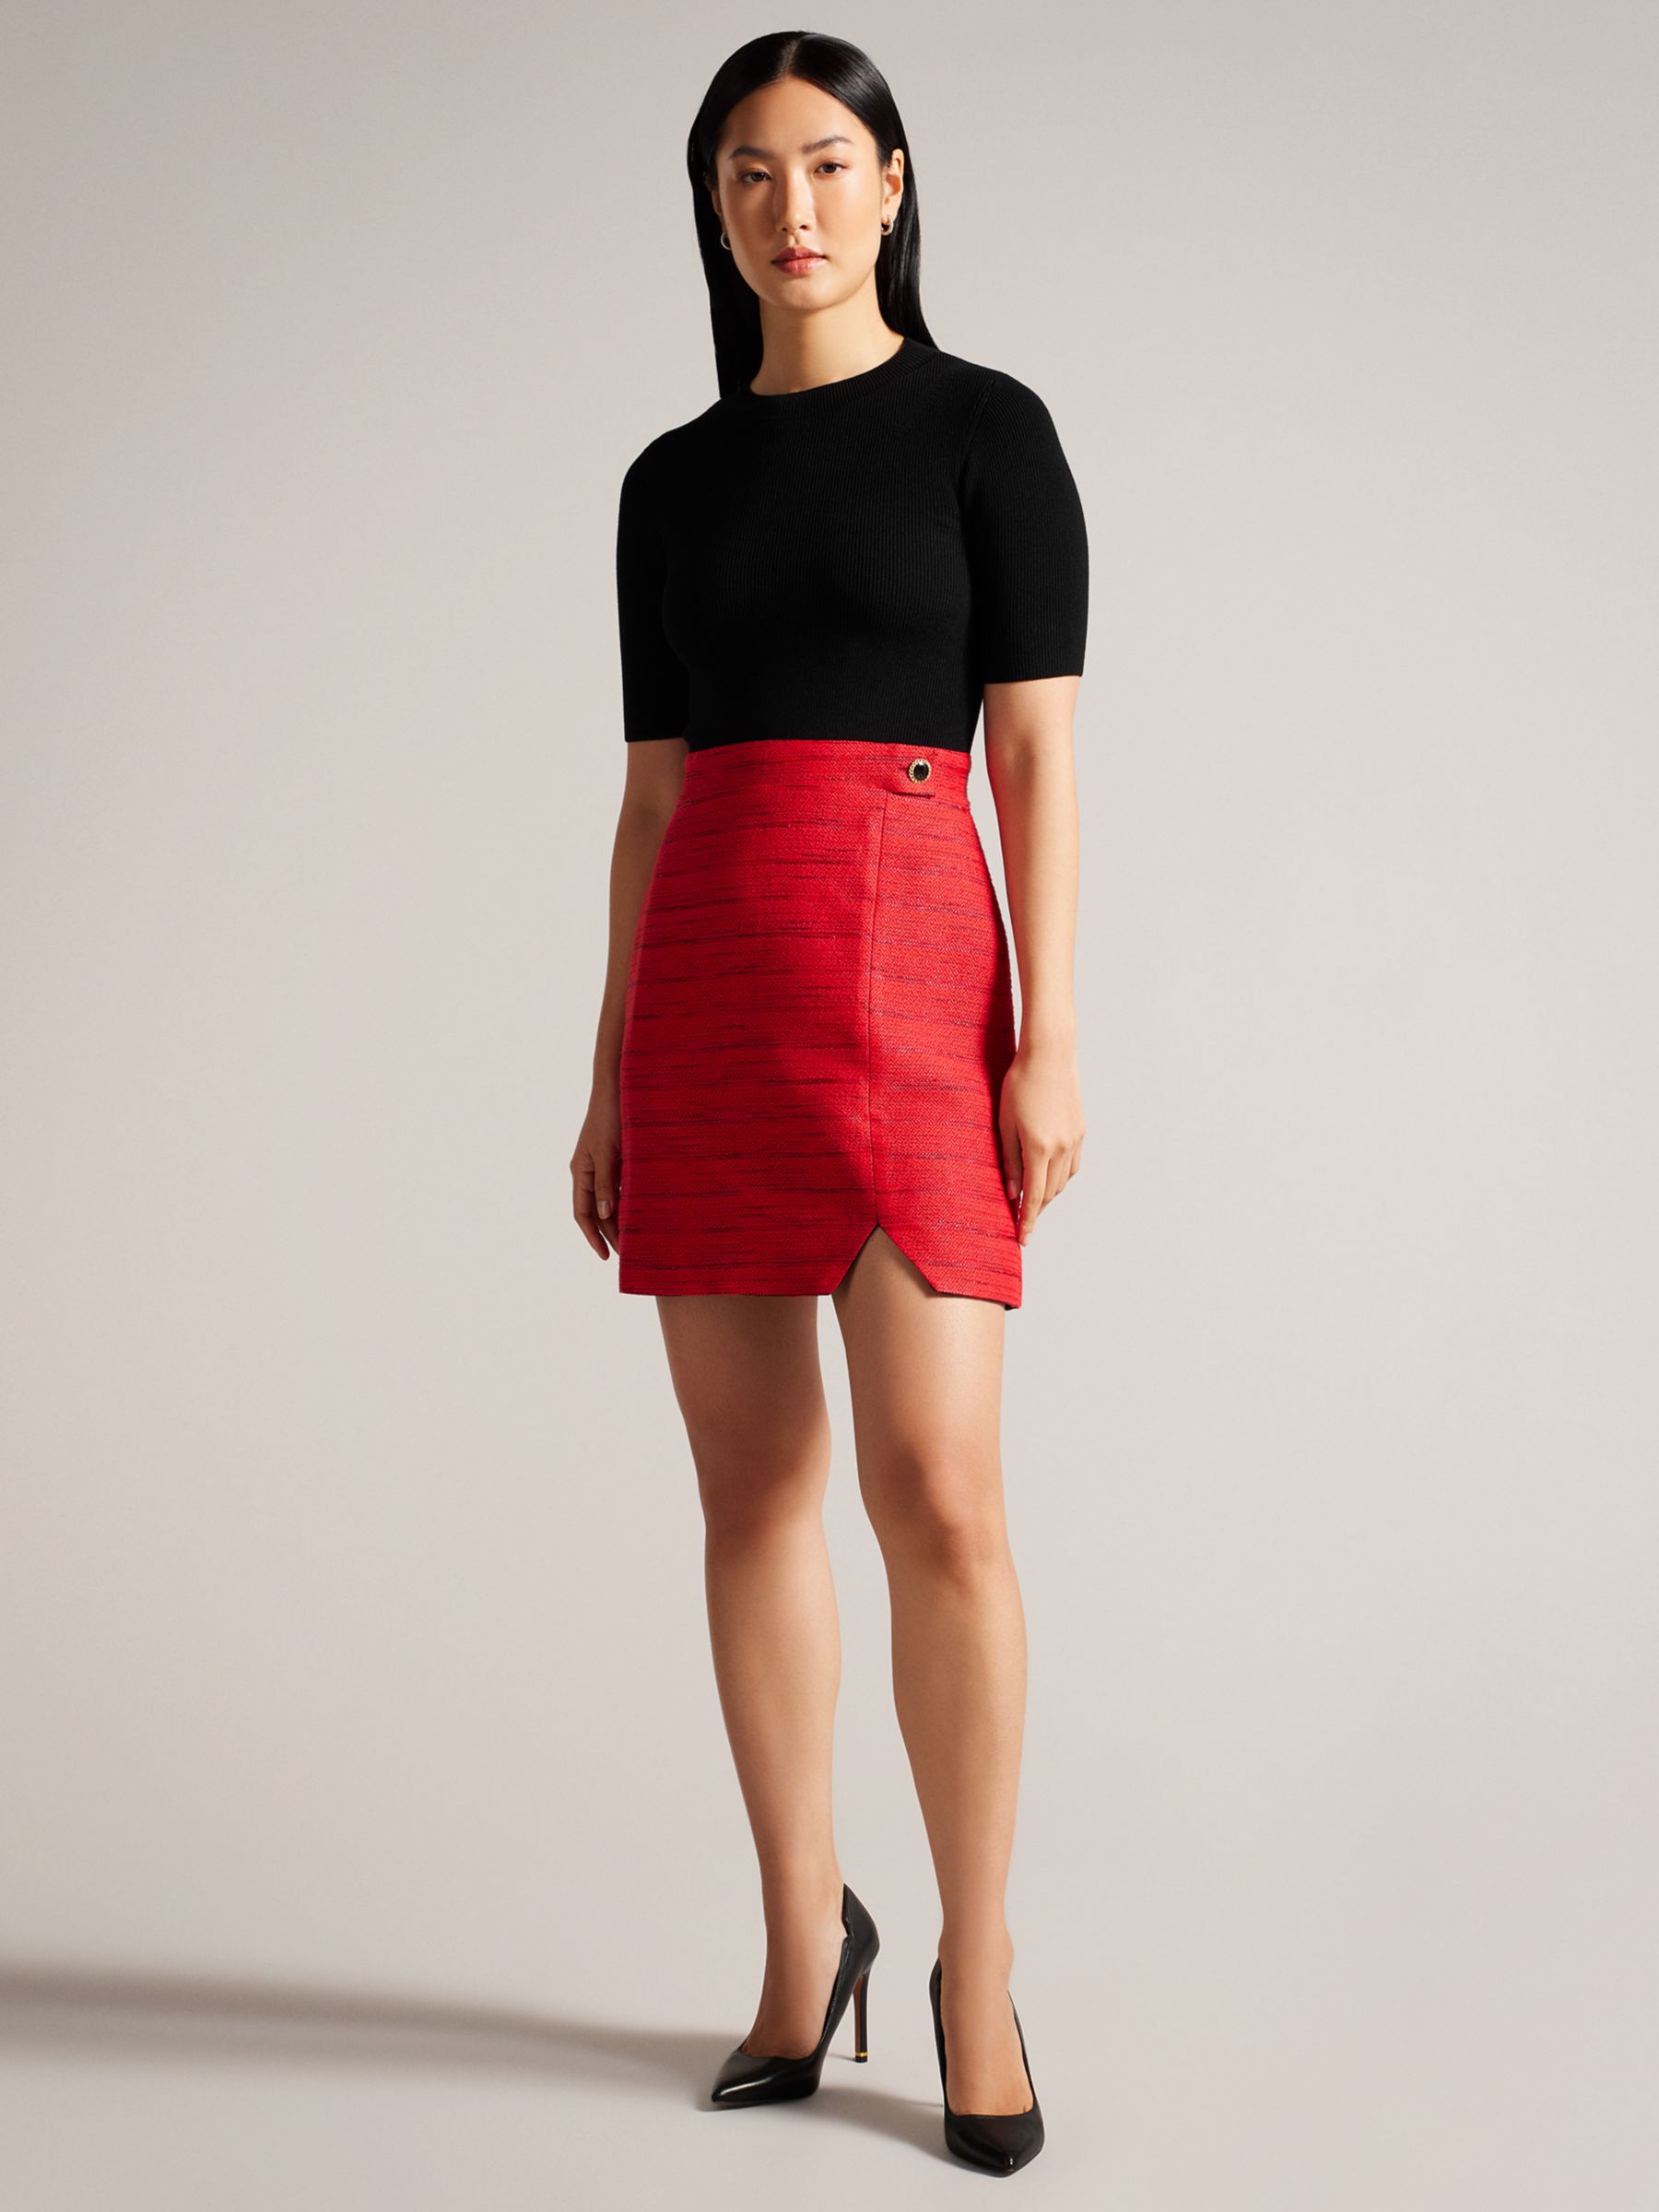 Ted Baker Illusion Mini Dress, Black/Red, 10